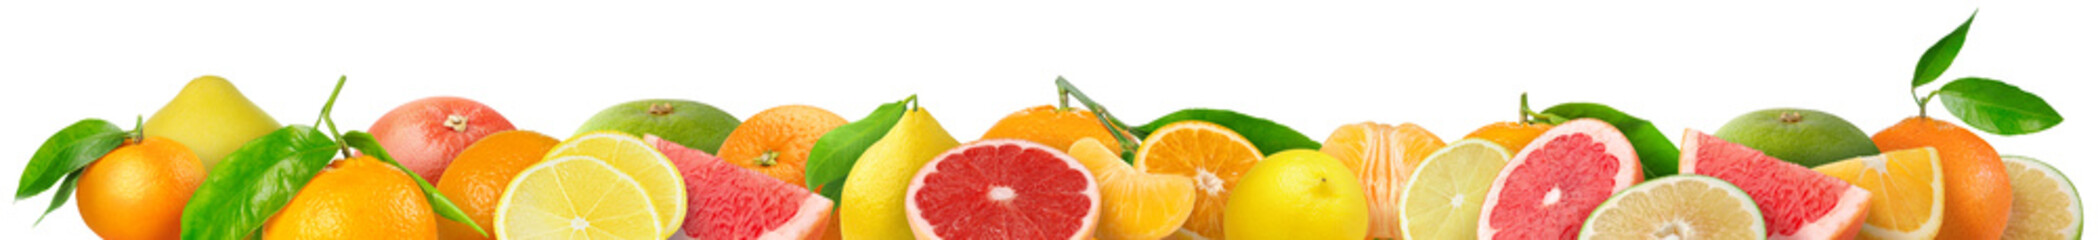 Mixed citrus fruits border. Pile of orange, lemon, tangerine, grapefruit and other citrus fruits in horizontal composition isolated over white background